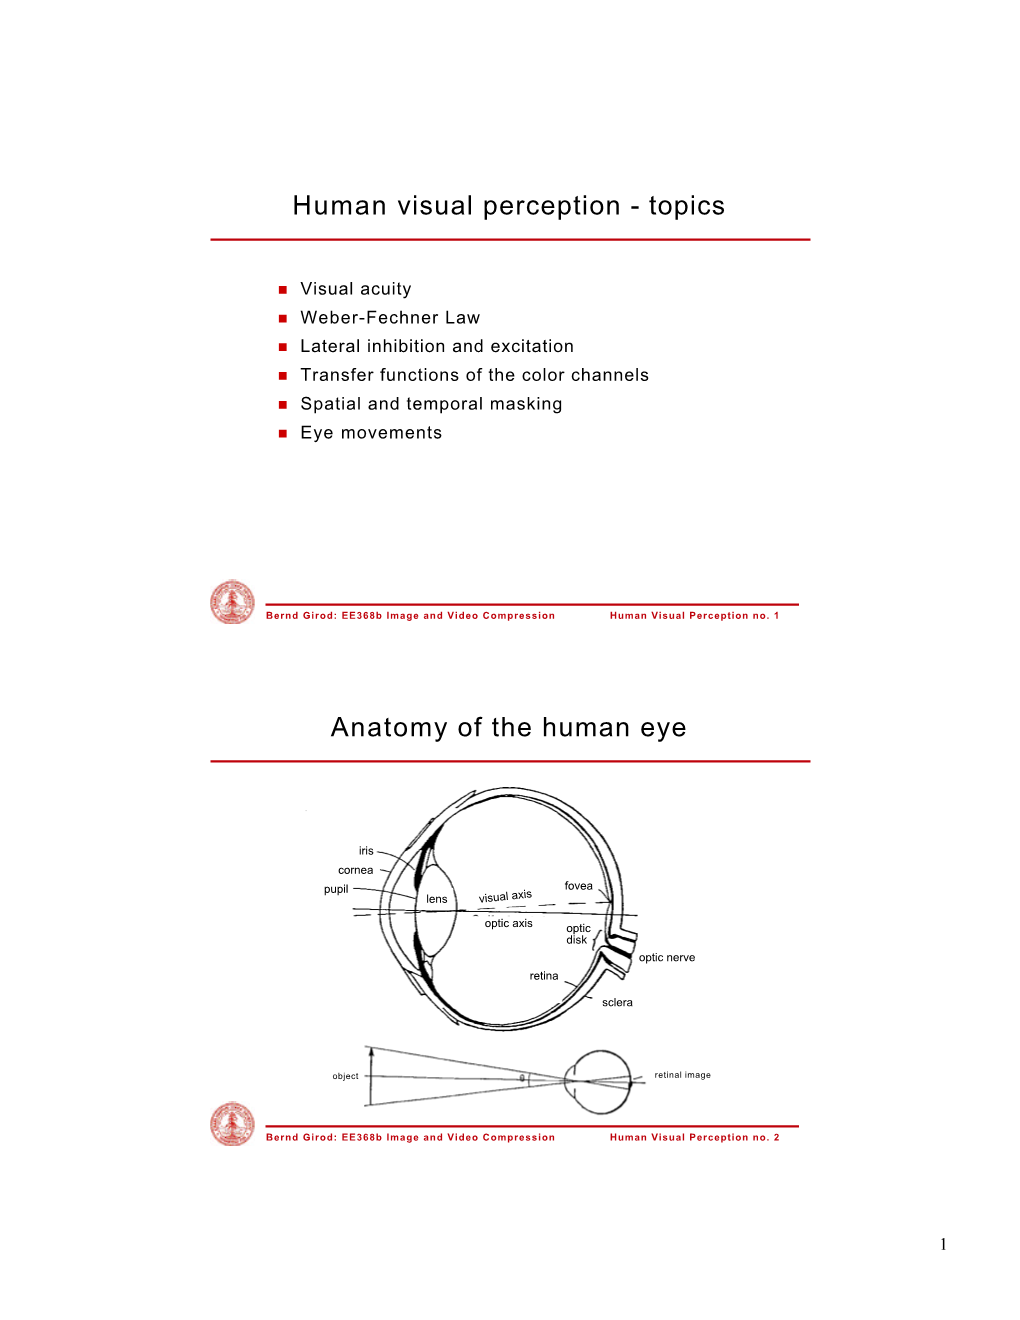 Human Visual Perception - Topics